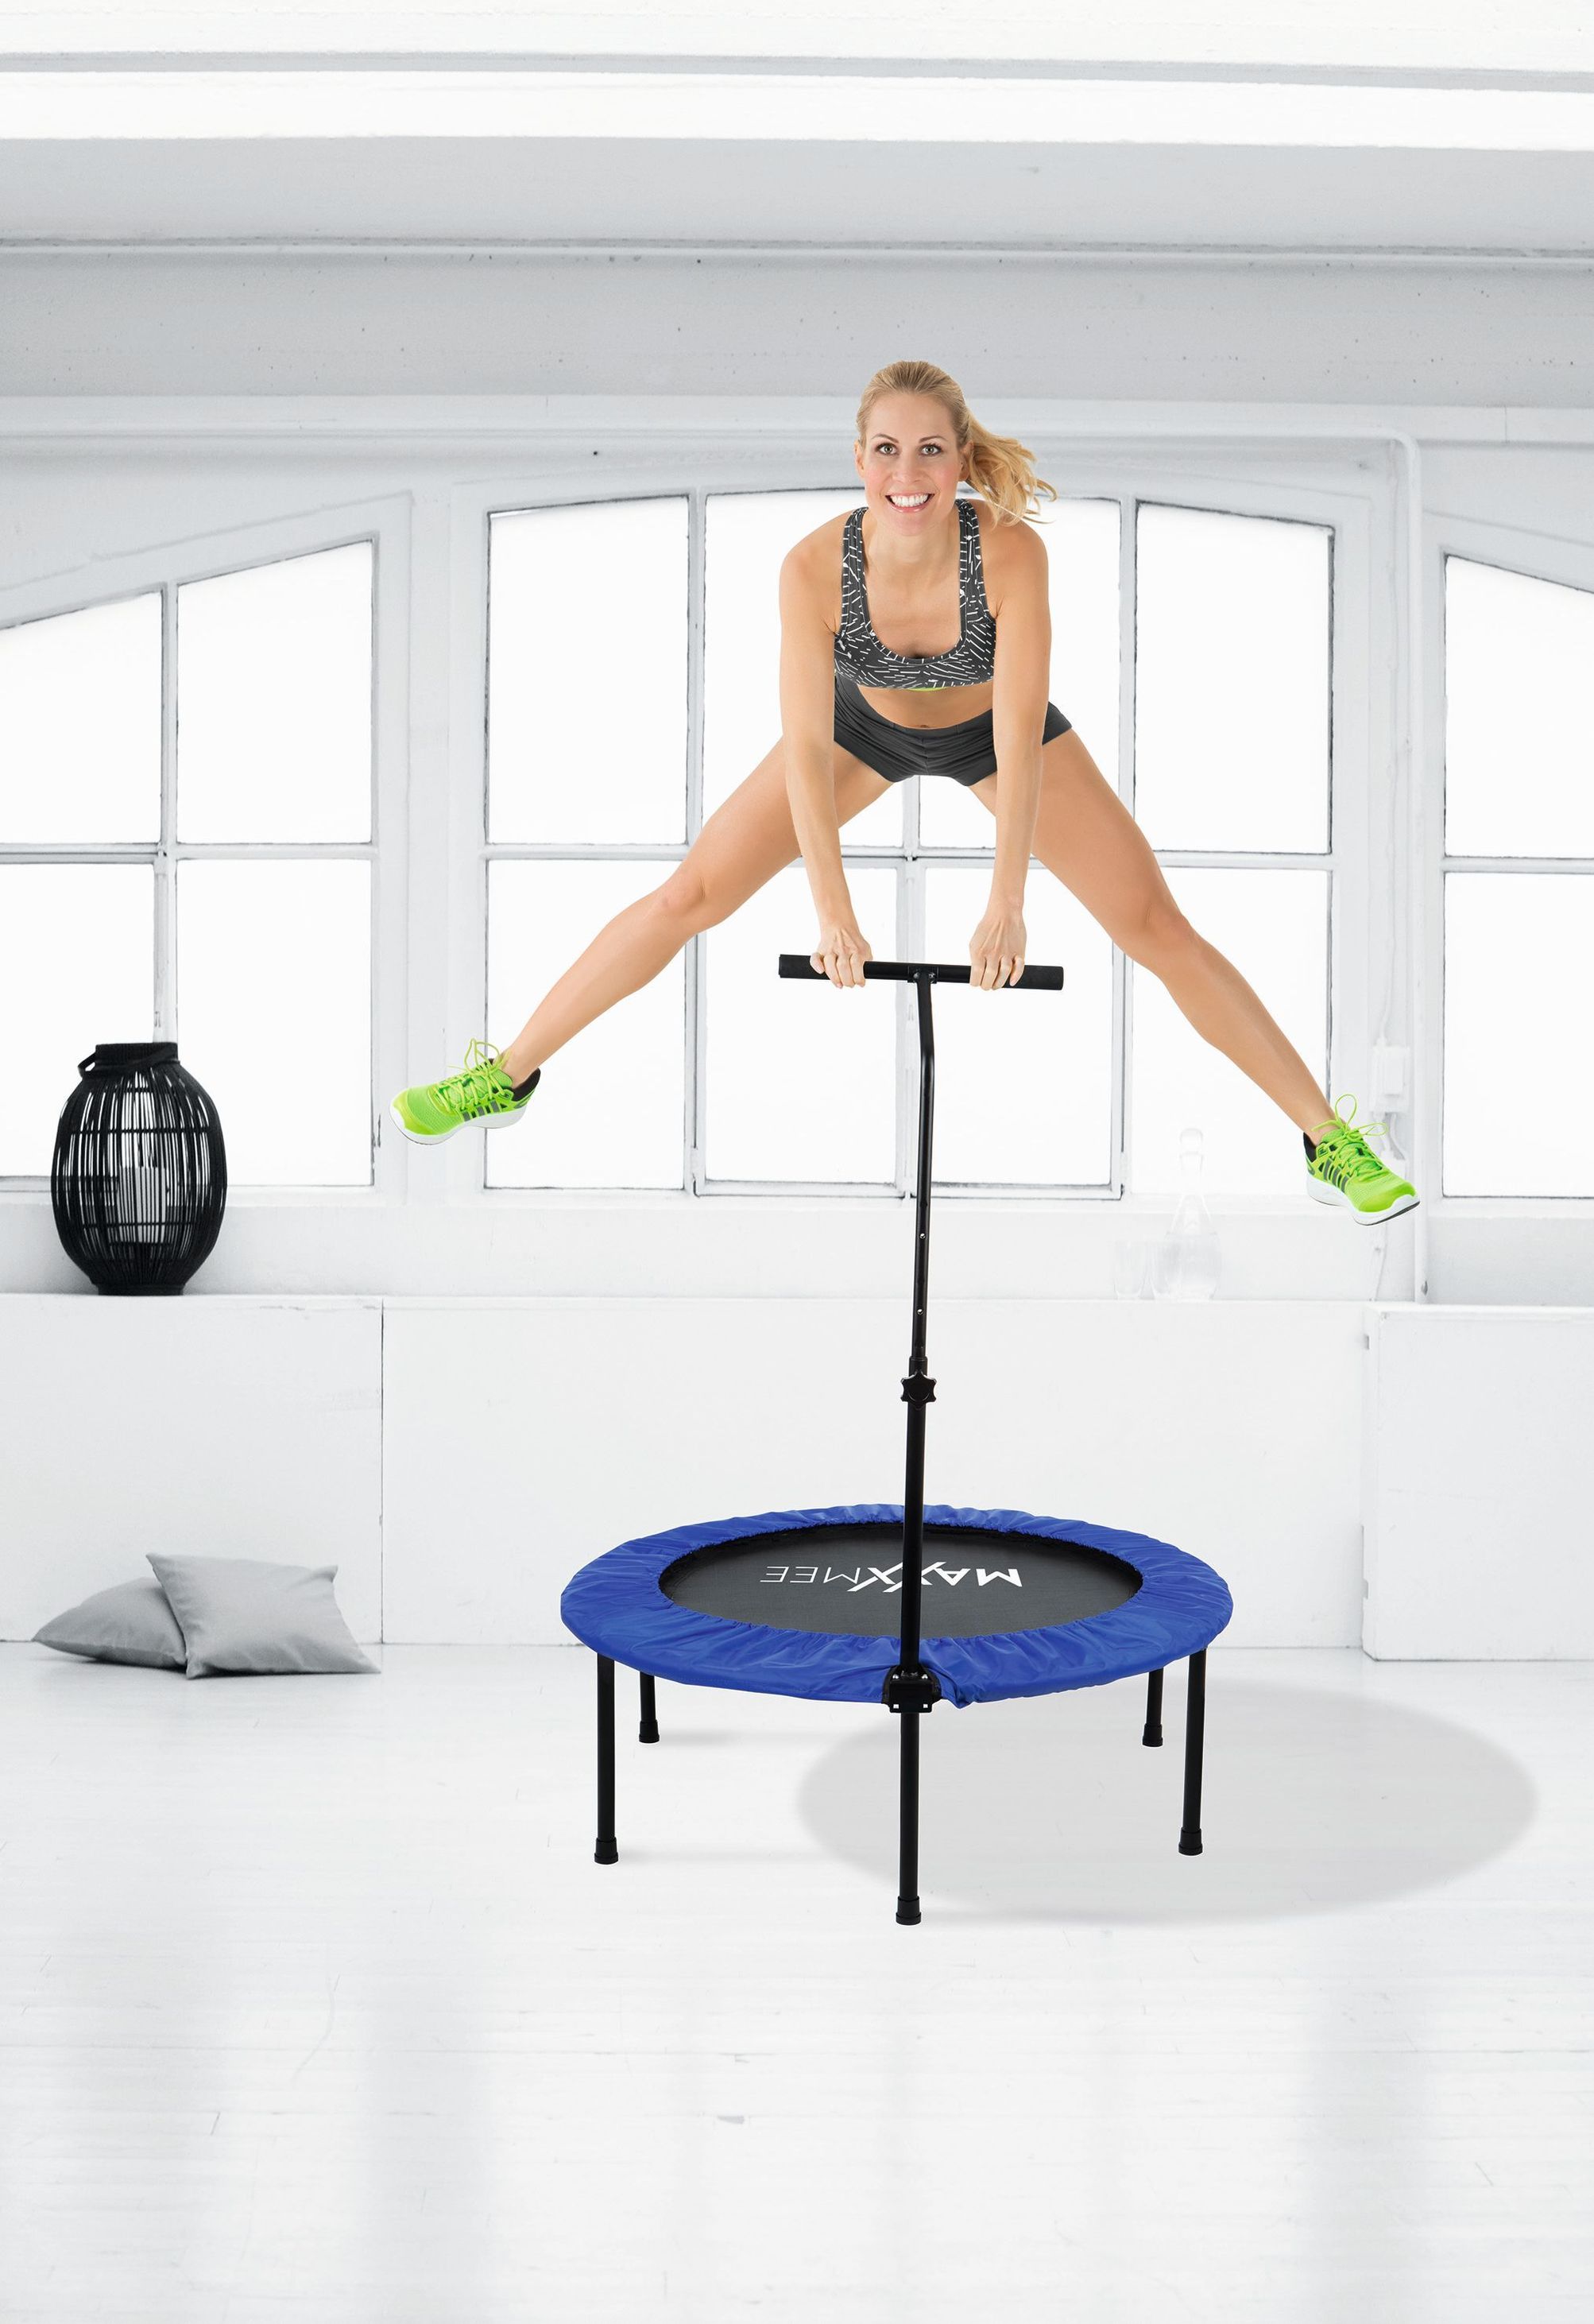 MAXXMEE Fitness-Trampolin, blau-schwarz bestellen | Weltbild.de